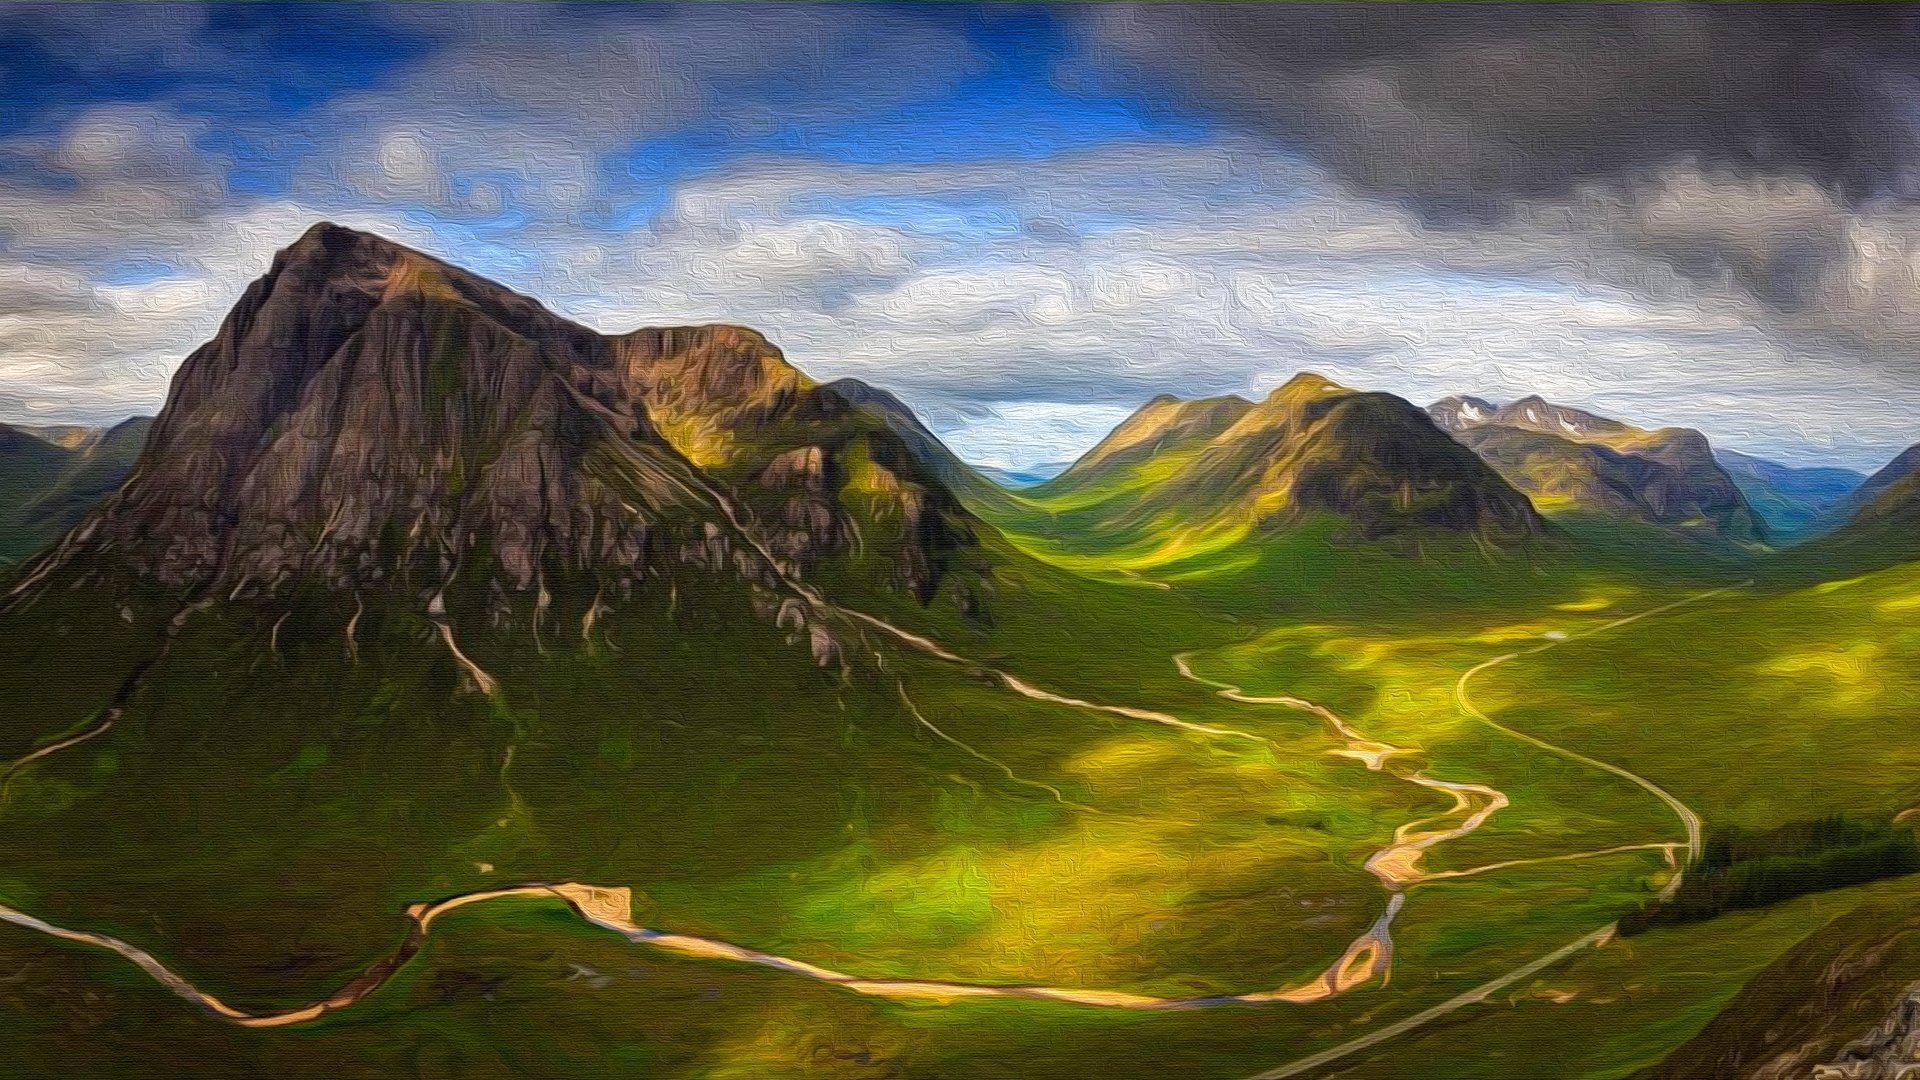 3840x2160 Scottish Highlands - Oil on Canvas Wallpaper Background Image. 